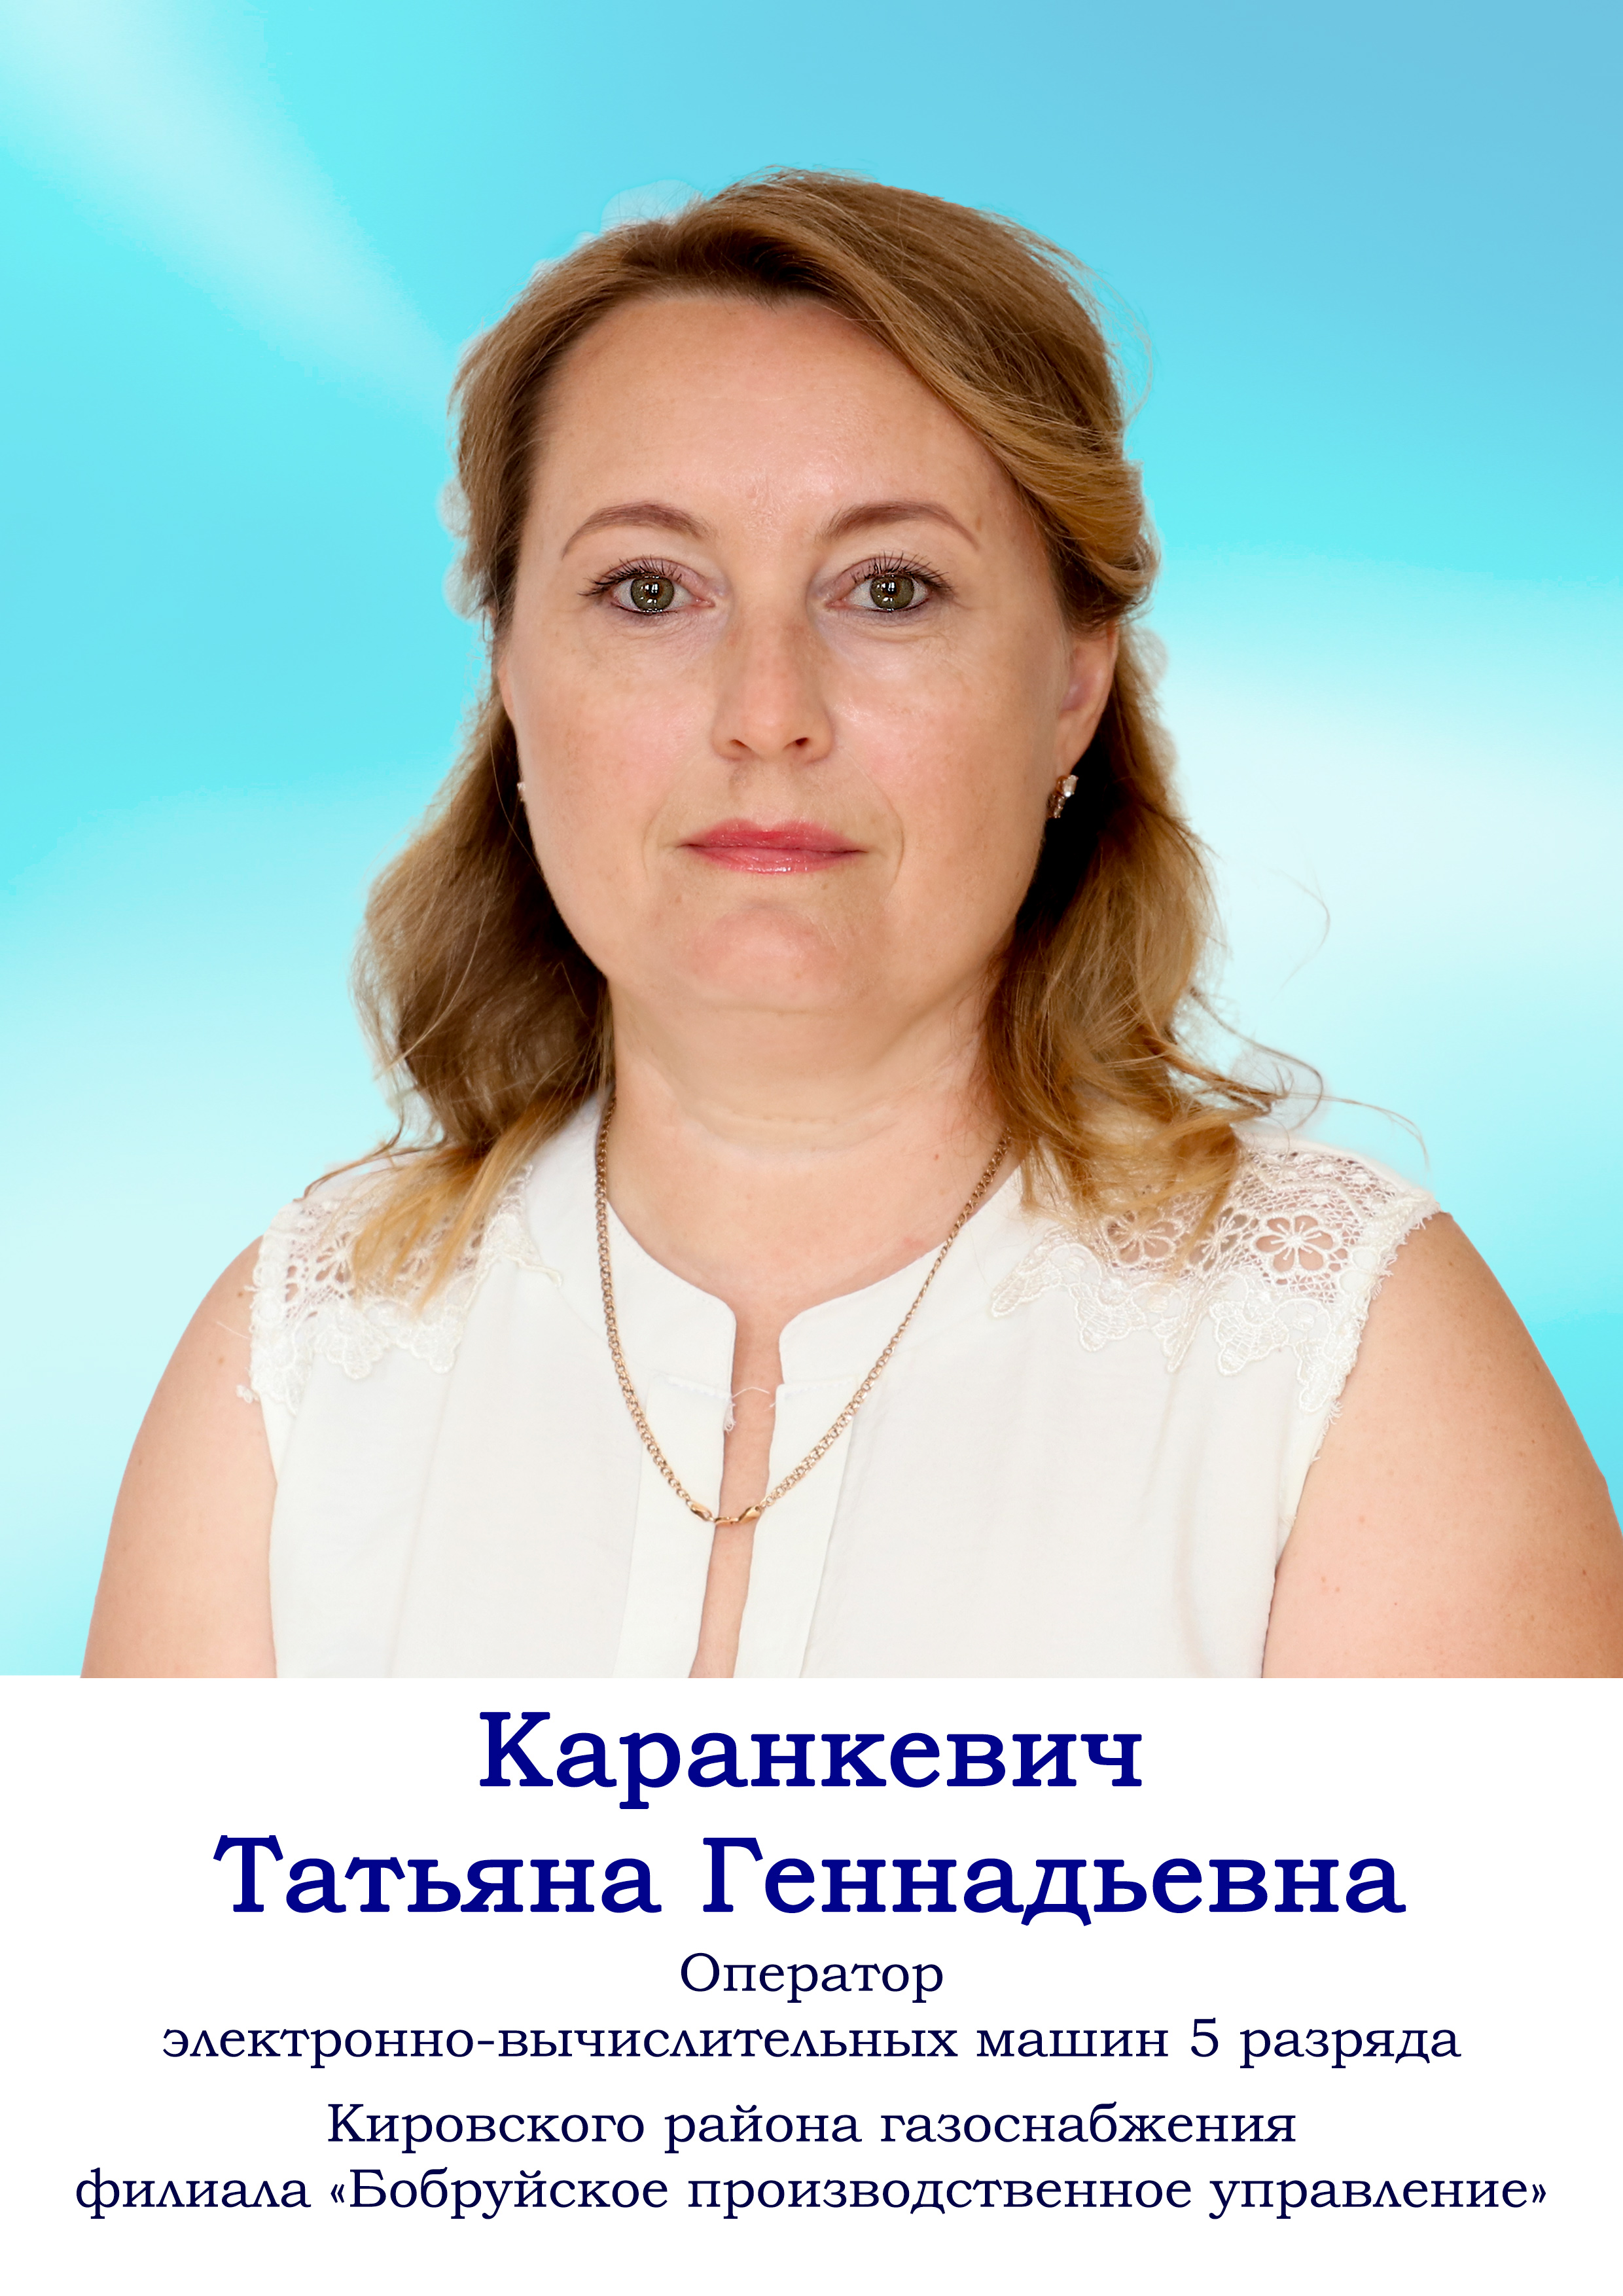 Каранкевич Татьяна Геннадьевна